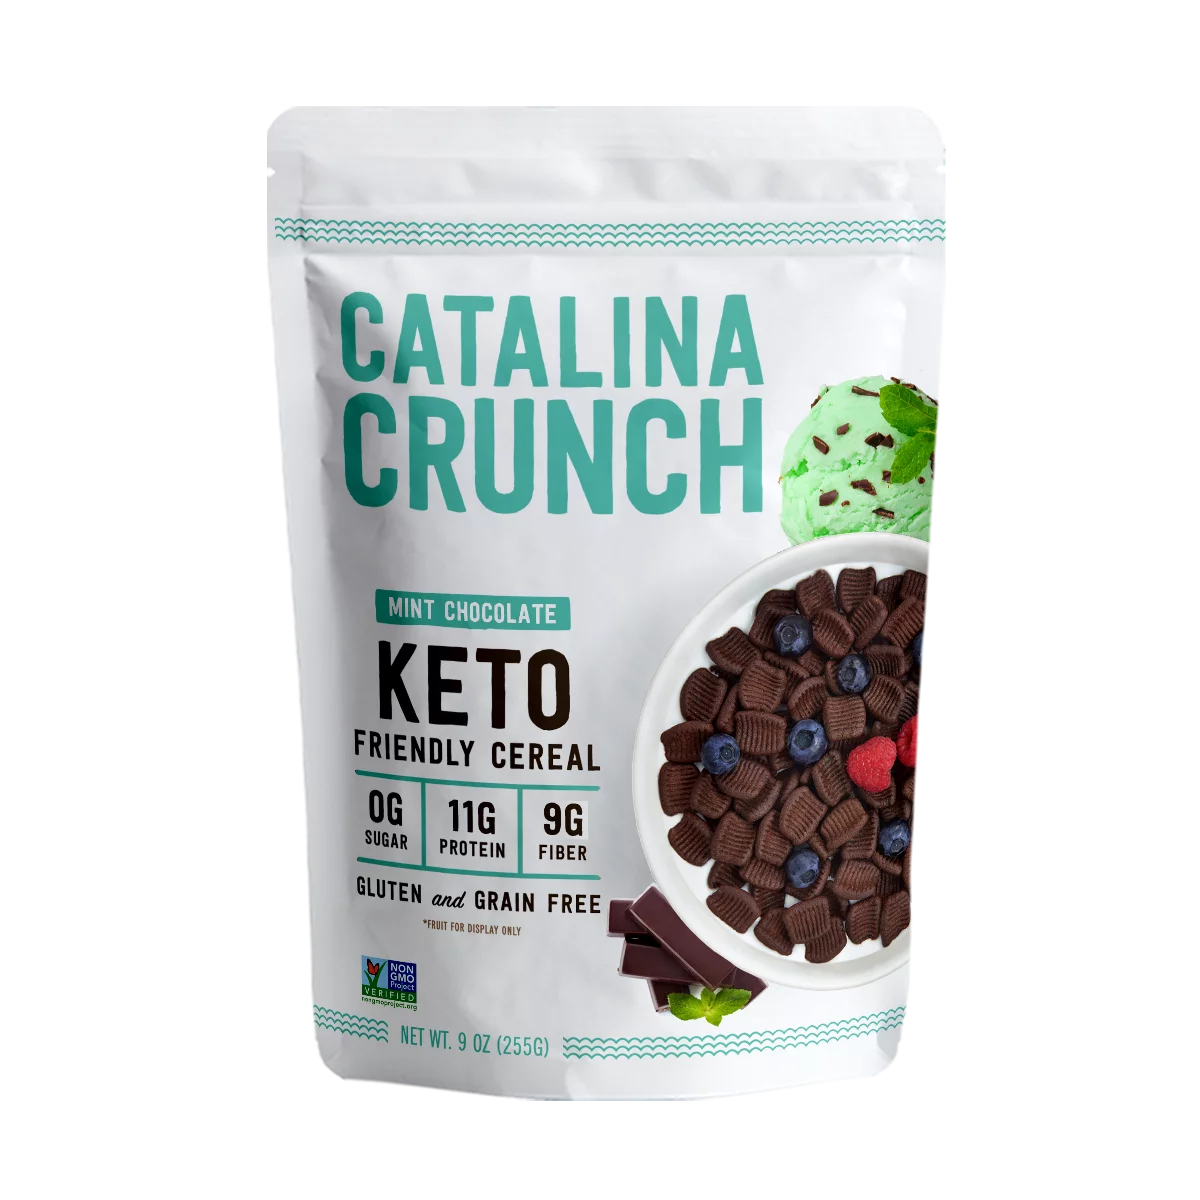 Catalina Crunch Mint Chocolate Chip Keto Cereal, 9oz bag | Low Carb, Zero Sugar, Gluten & Grain Free, Fiber | Keto Snacks, Vegan Snacks, Protein Snacks | Keto Friendly Foods